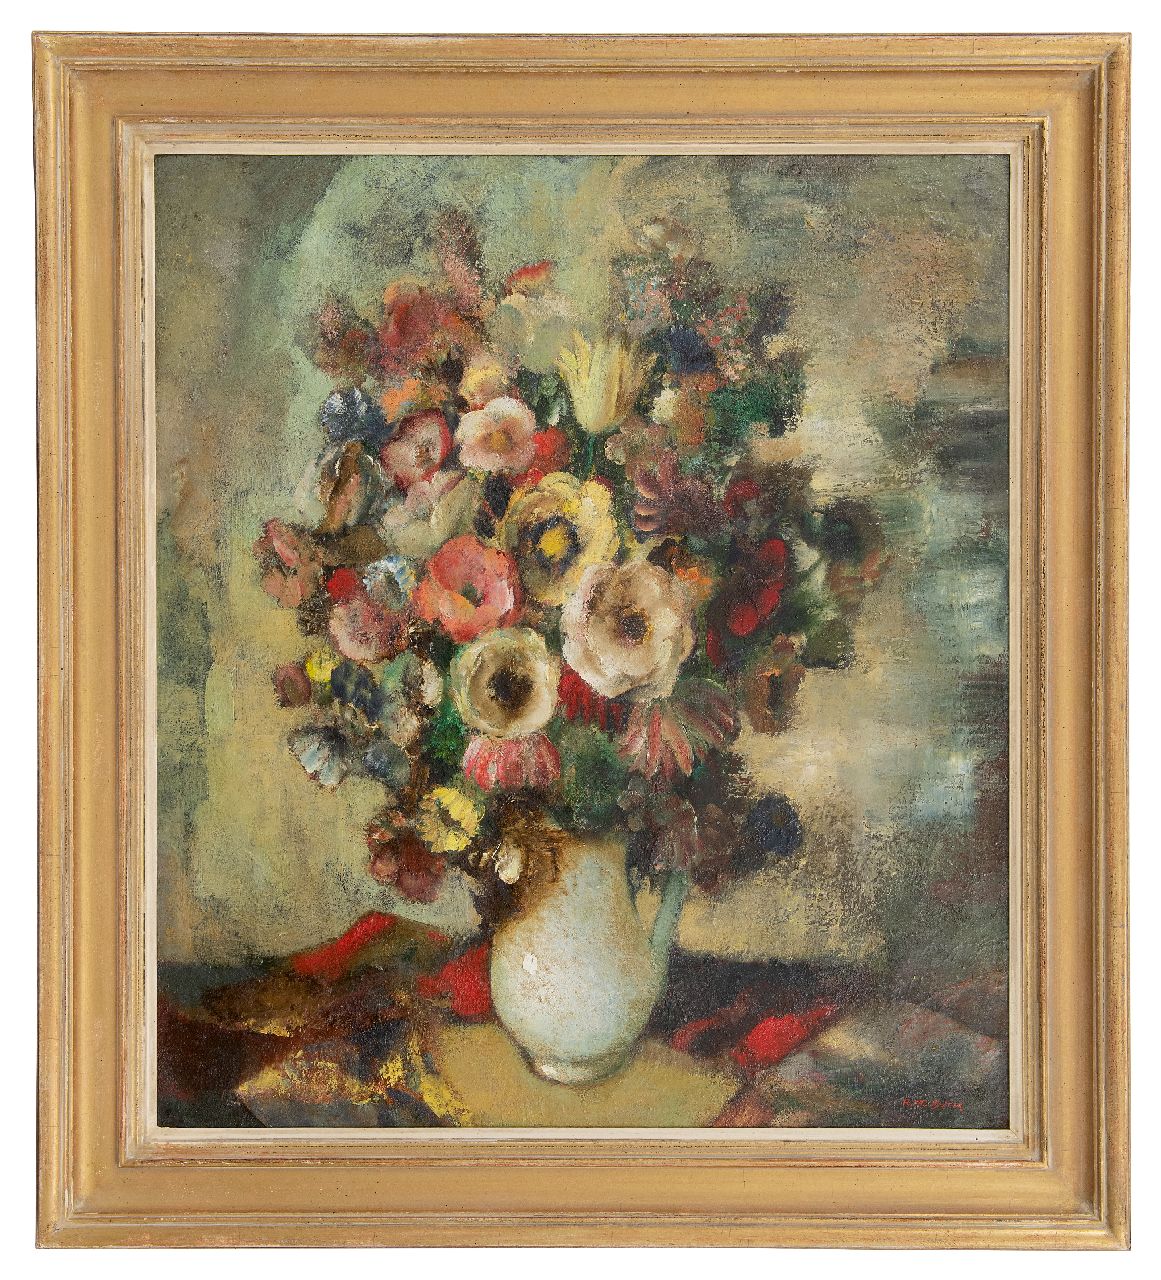 Buck R. de | Raphaël de Buck | Paintings offered for sale | Flower still life, oil on canvas 79.8 x 70.5 cm, signed l.r.